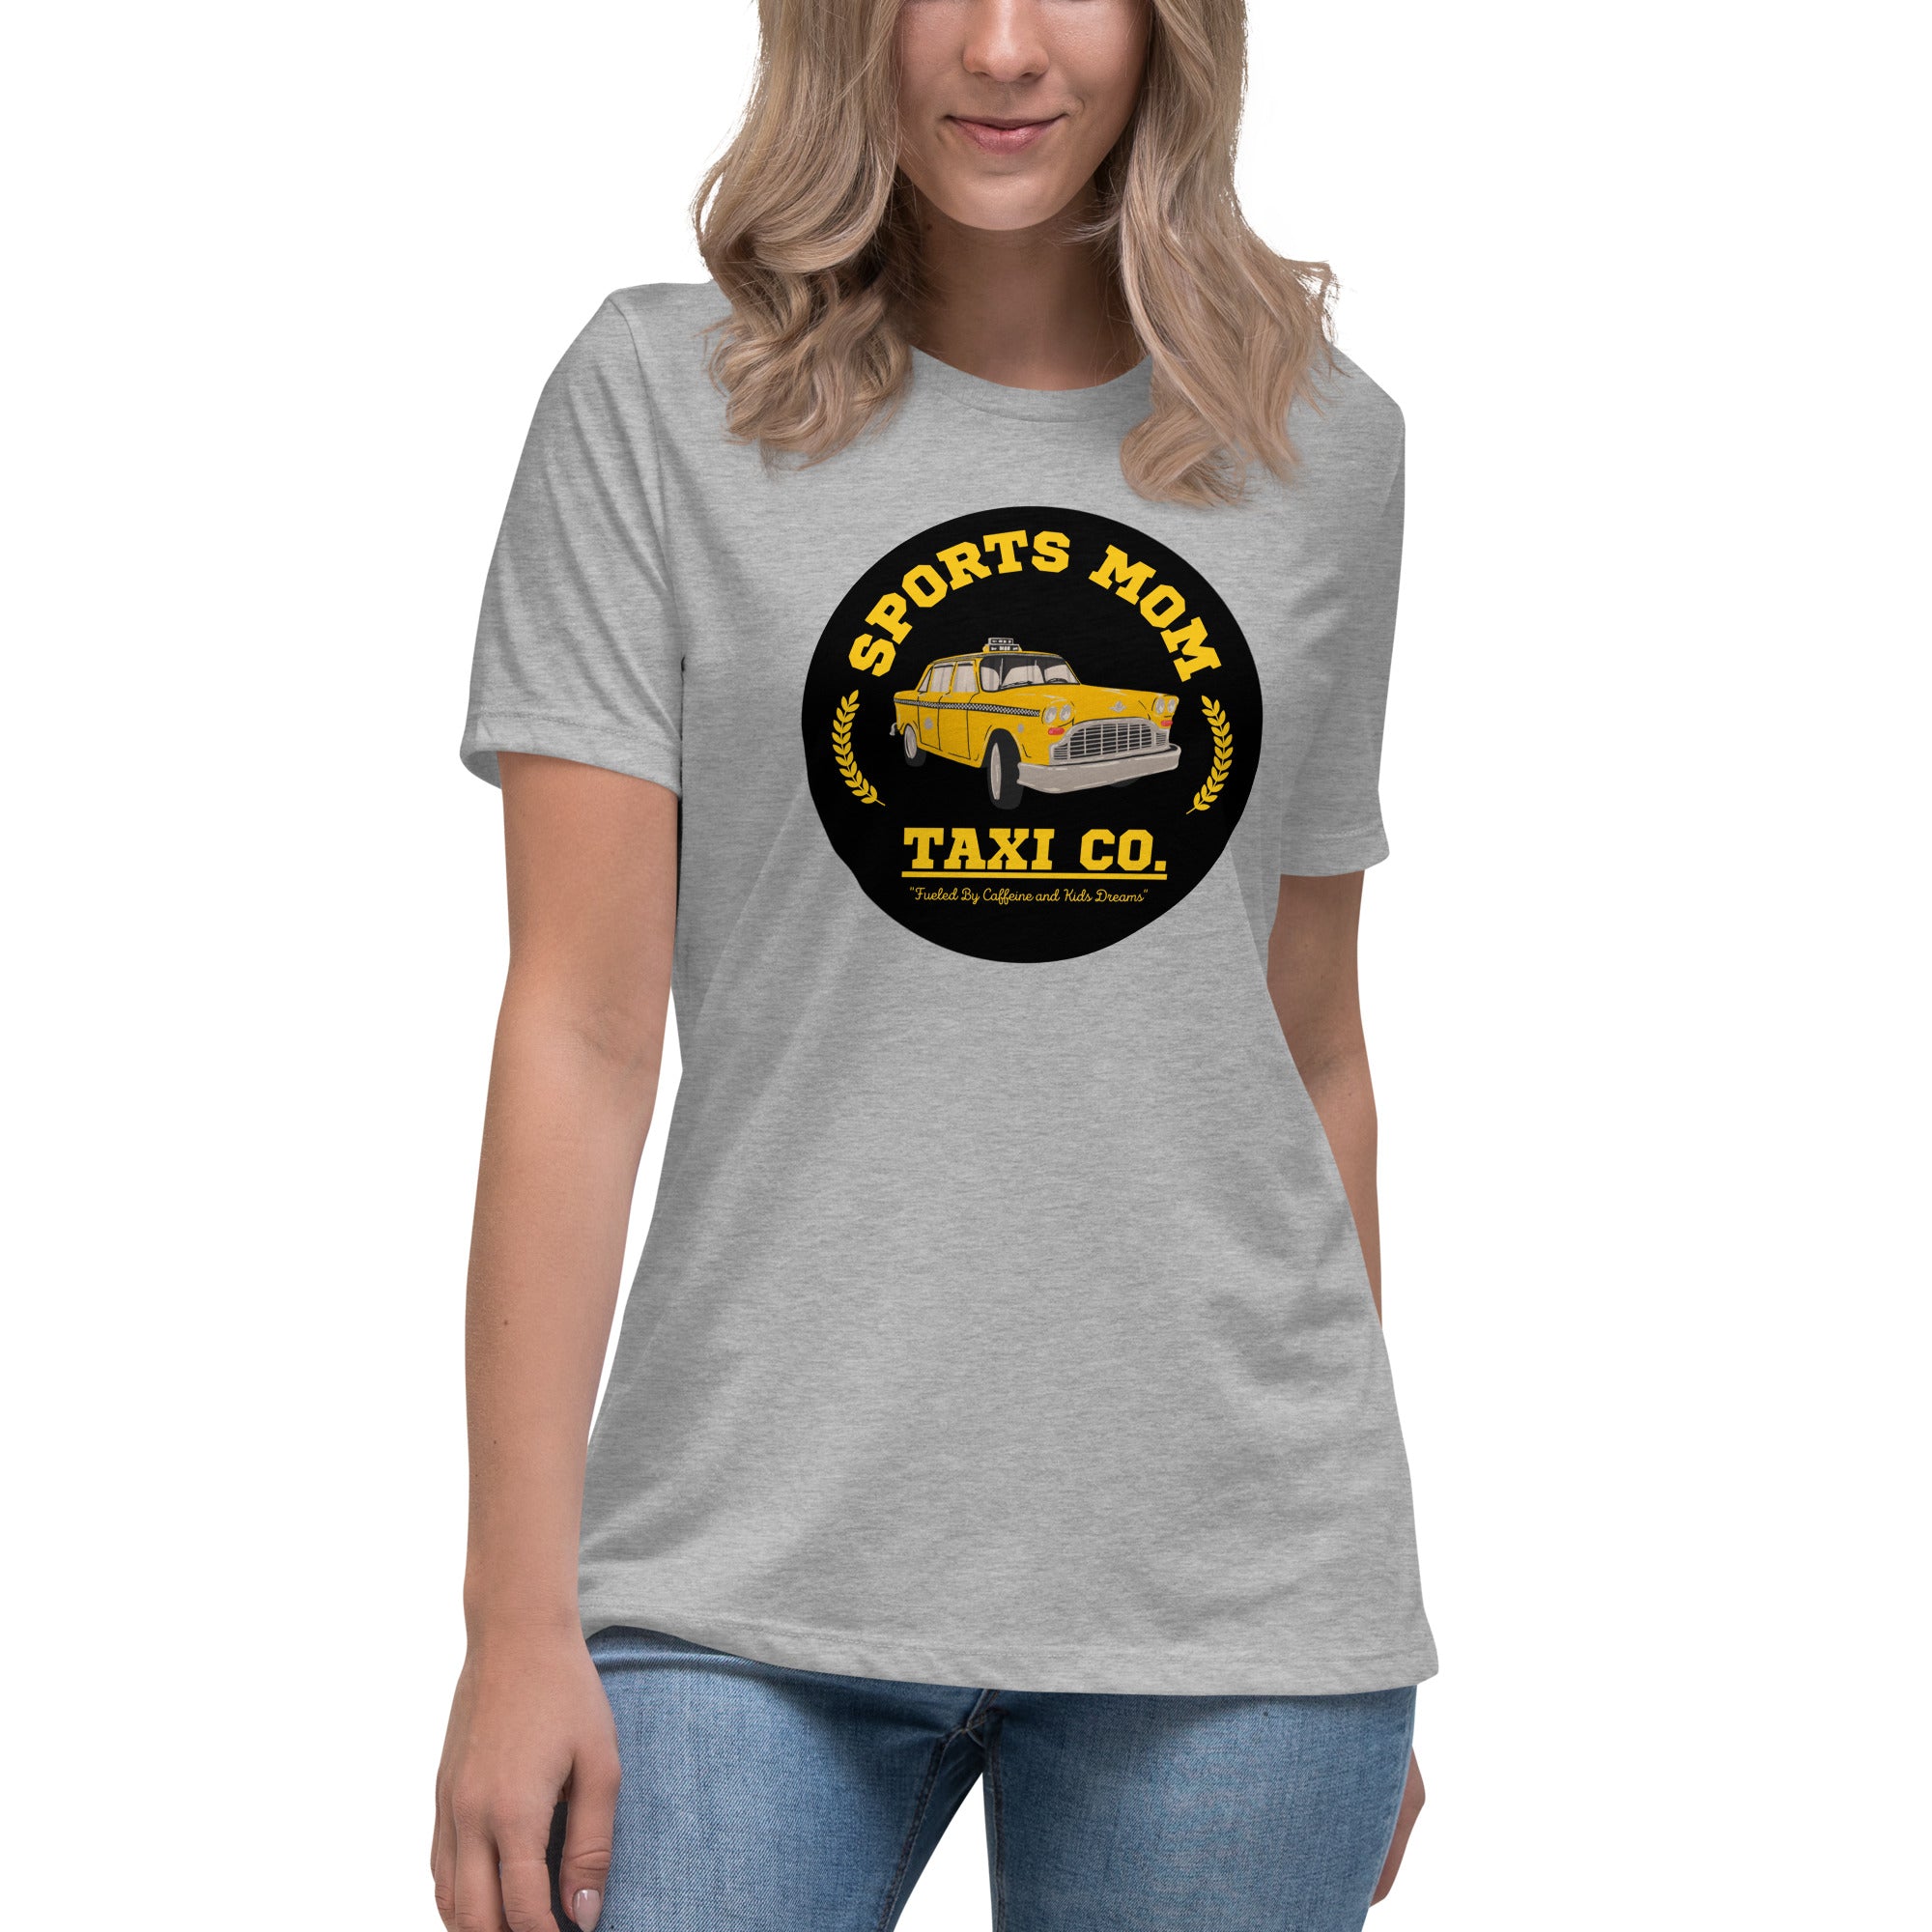 The Sports Mom Taxi Co. Original Premium Fit T-Shirt